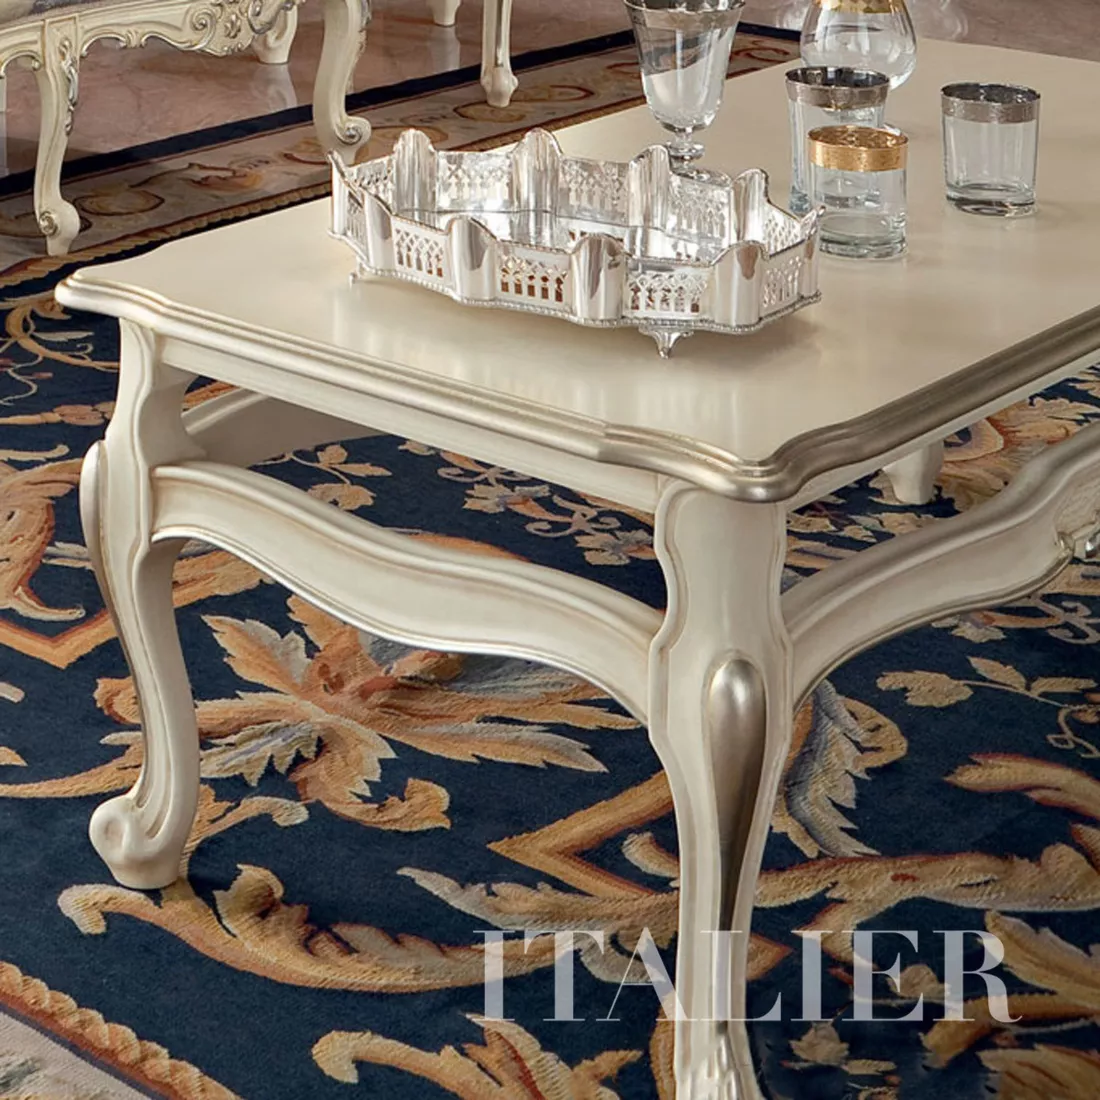 Office-luxury-tea-set-classic-furniture-Bella-Vita-collection-Modenese-Gastone---kopiejzhgt - kopie